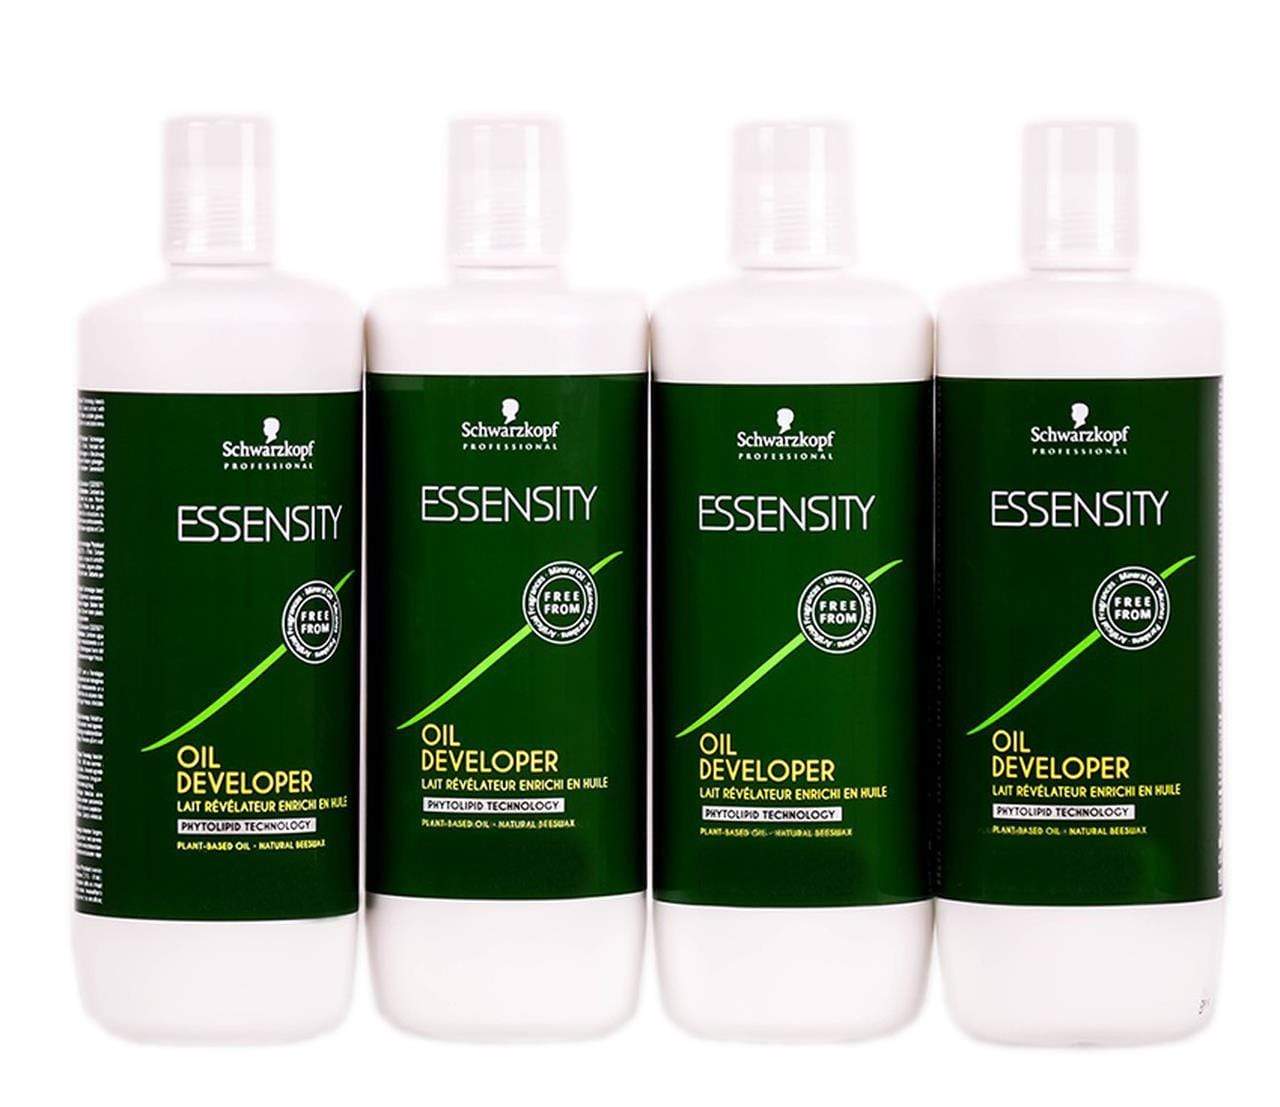 SCHWARZKOPF - ESSENSITY_Essensity Oil Developer 5.5%/18 Vol_Cosmetic World